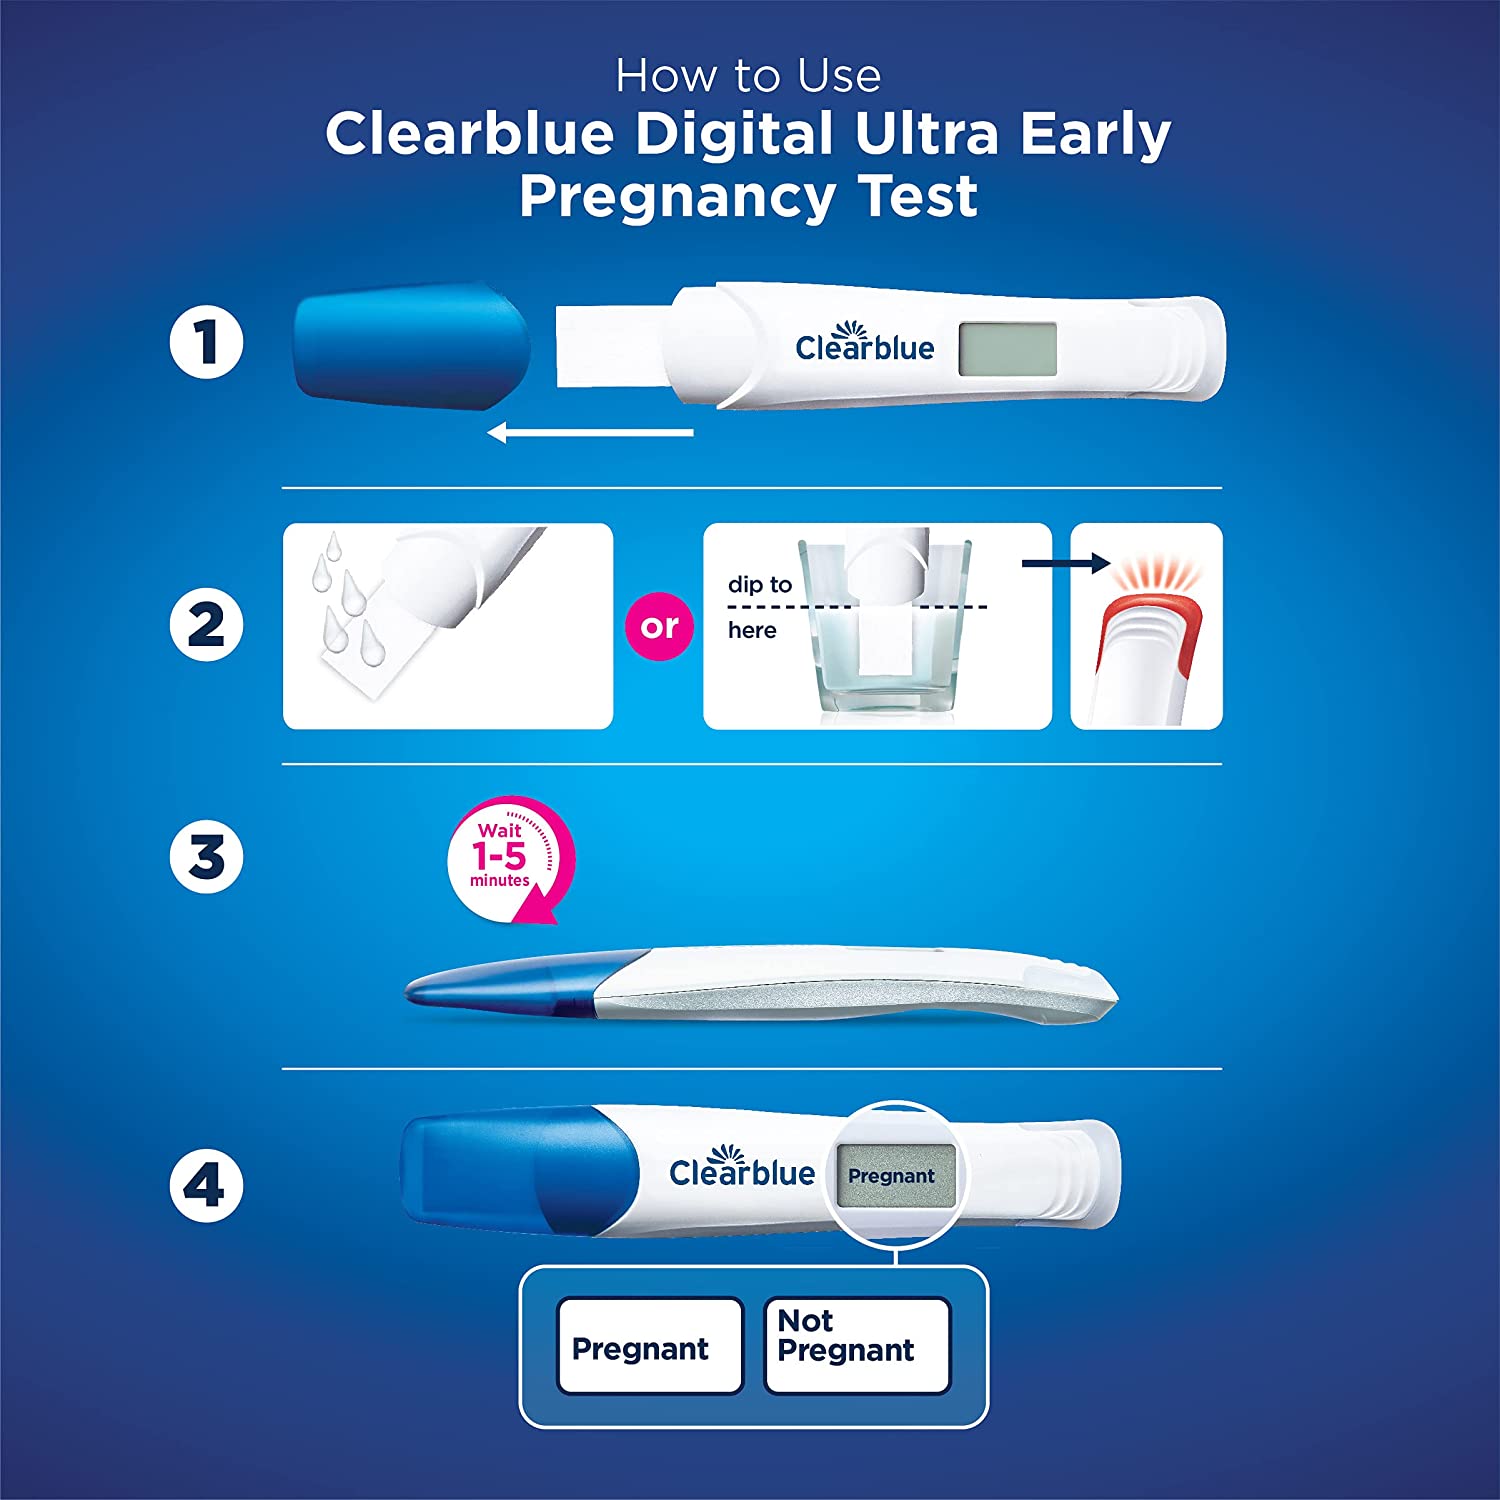 Тесты clearblue форум. Кассетный тест Clearblue. Струйный тест Clearblue. Цифровой тест на беременность Clearblue инструкция. Clearblue интерпретация результатов.